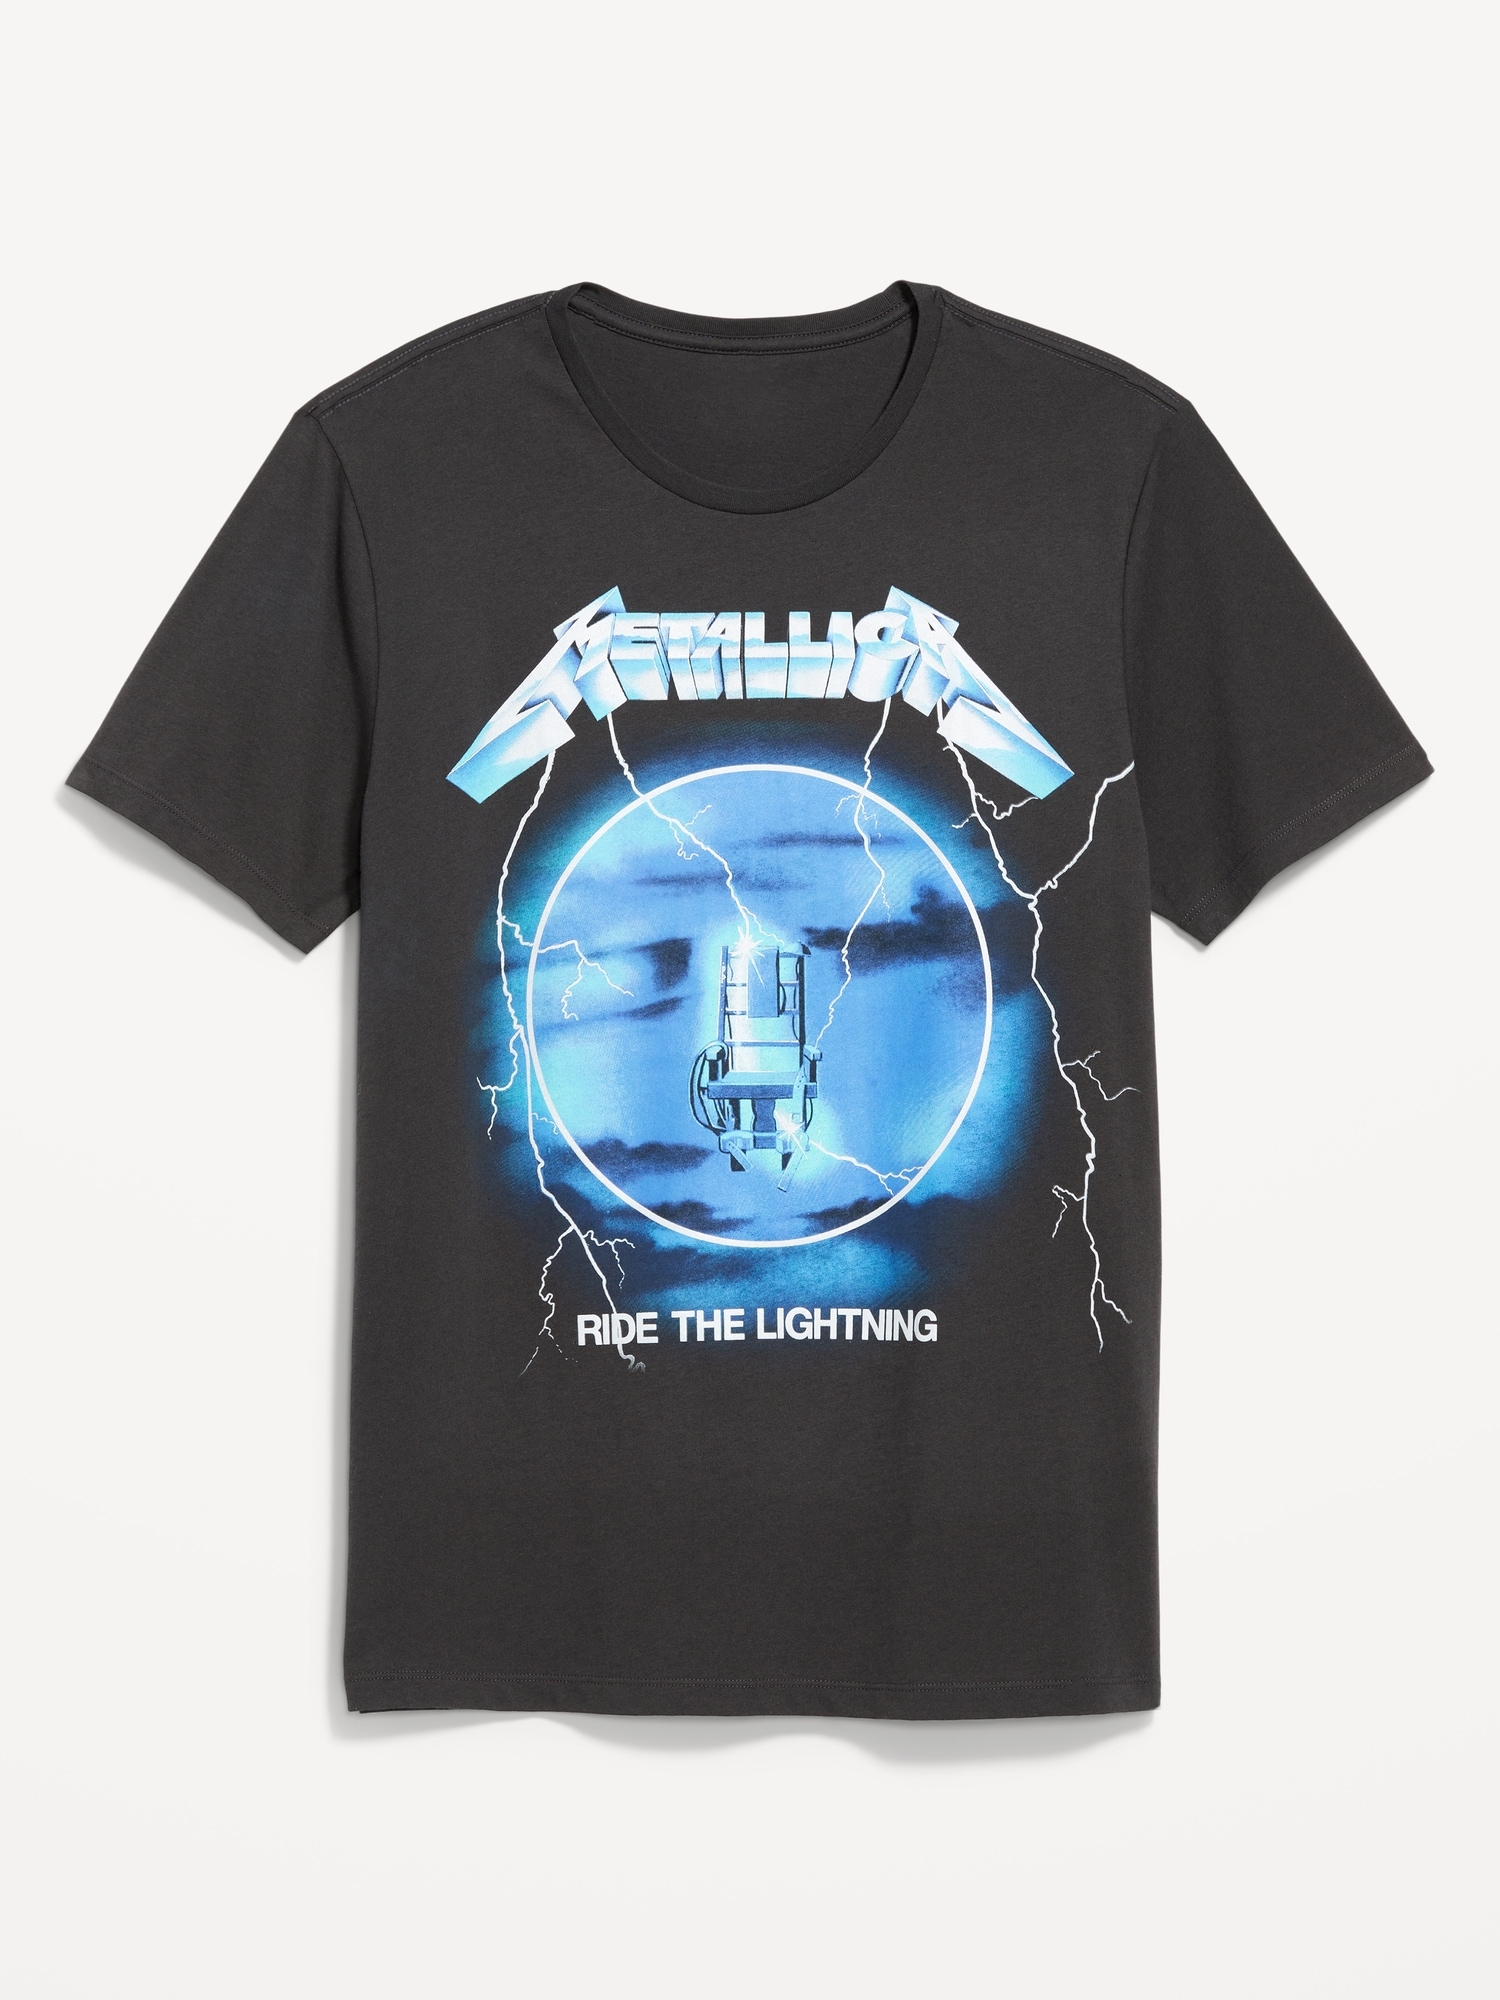 Metallica Gender-Neutral T-Shirt for Adults